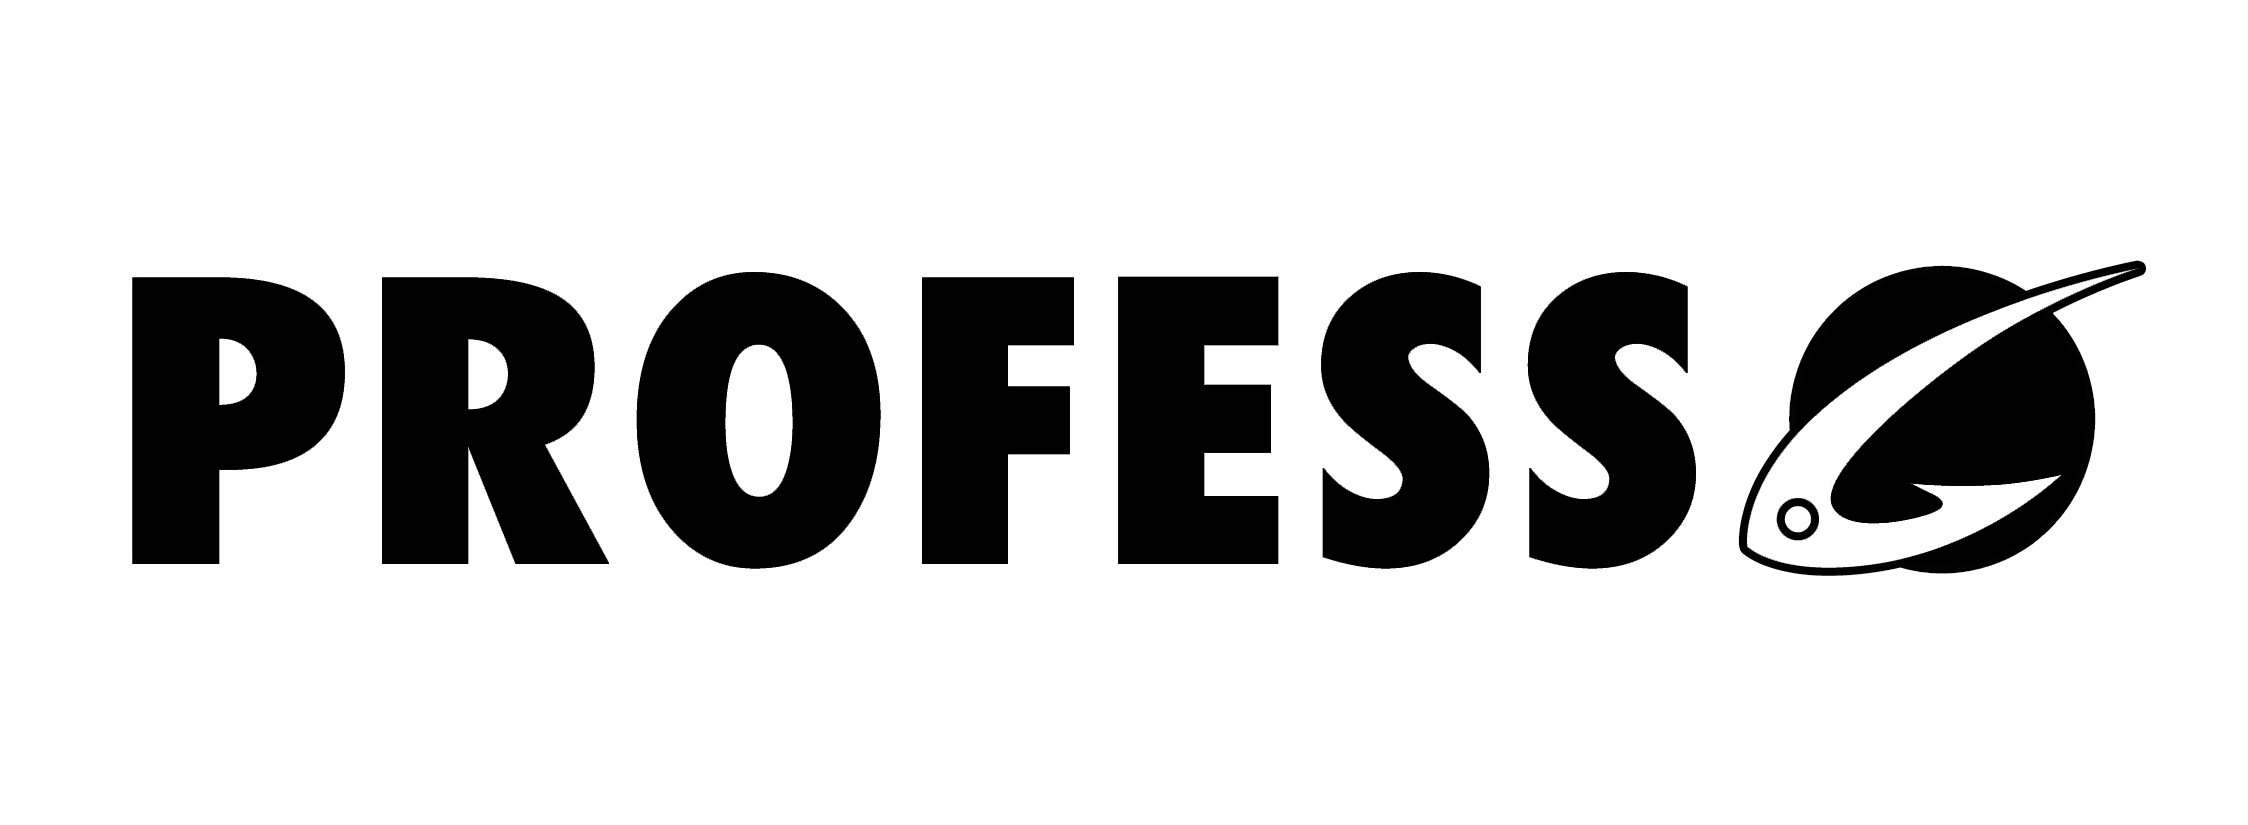 Profess logo